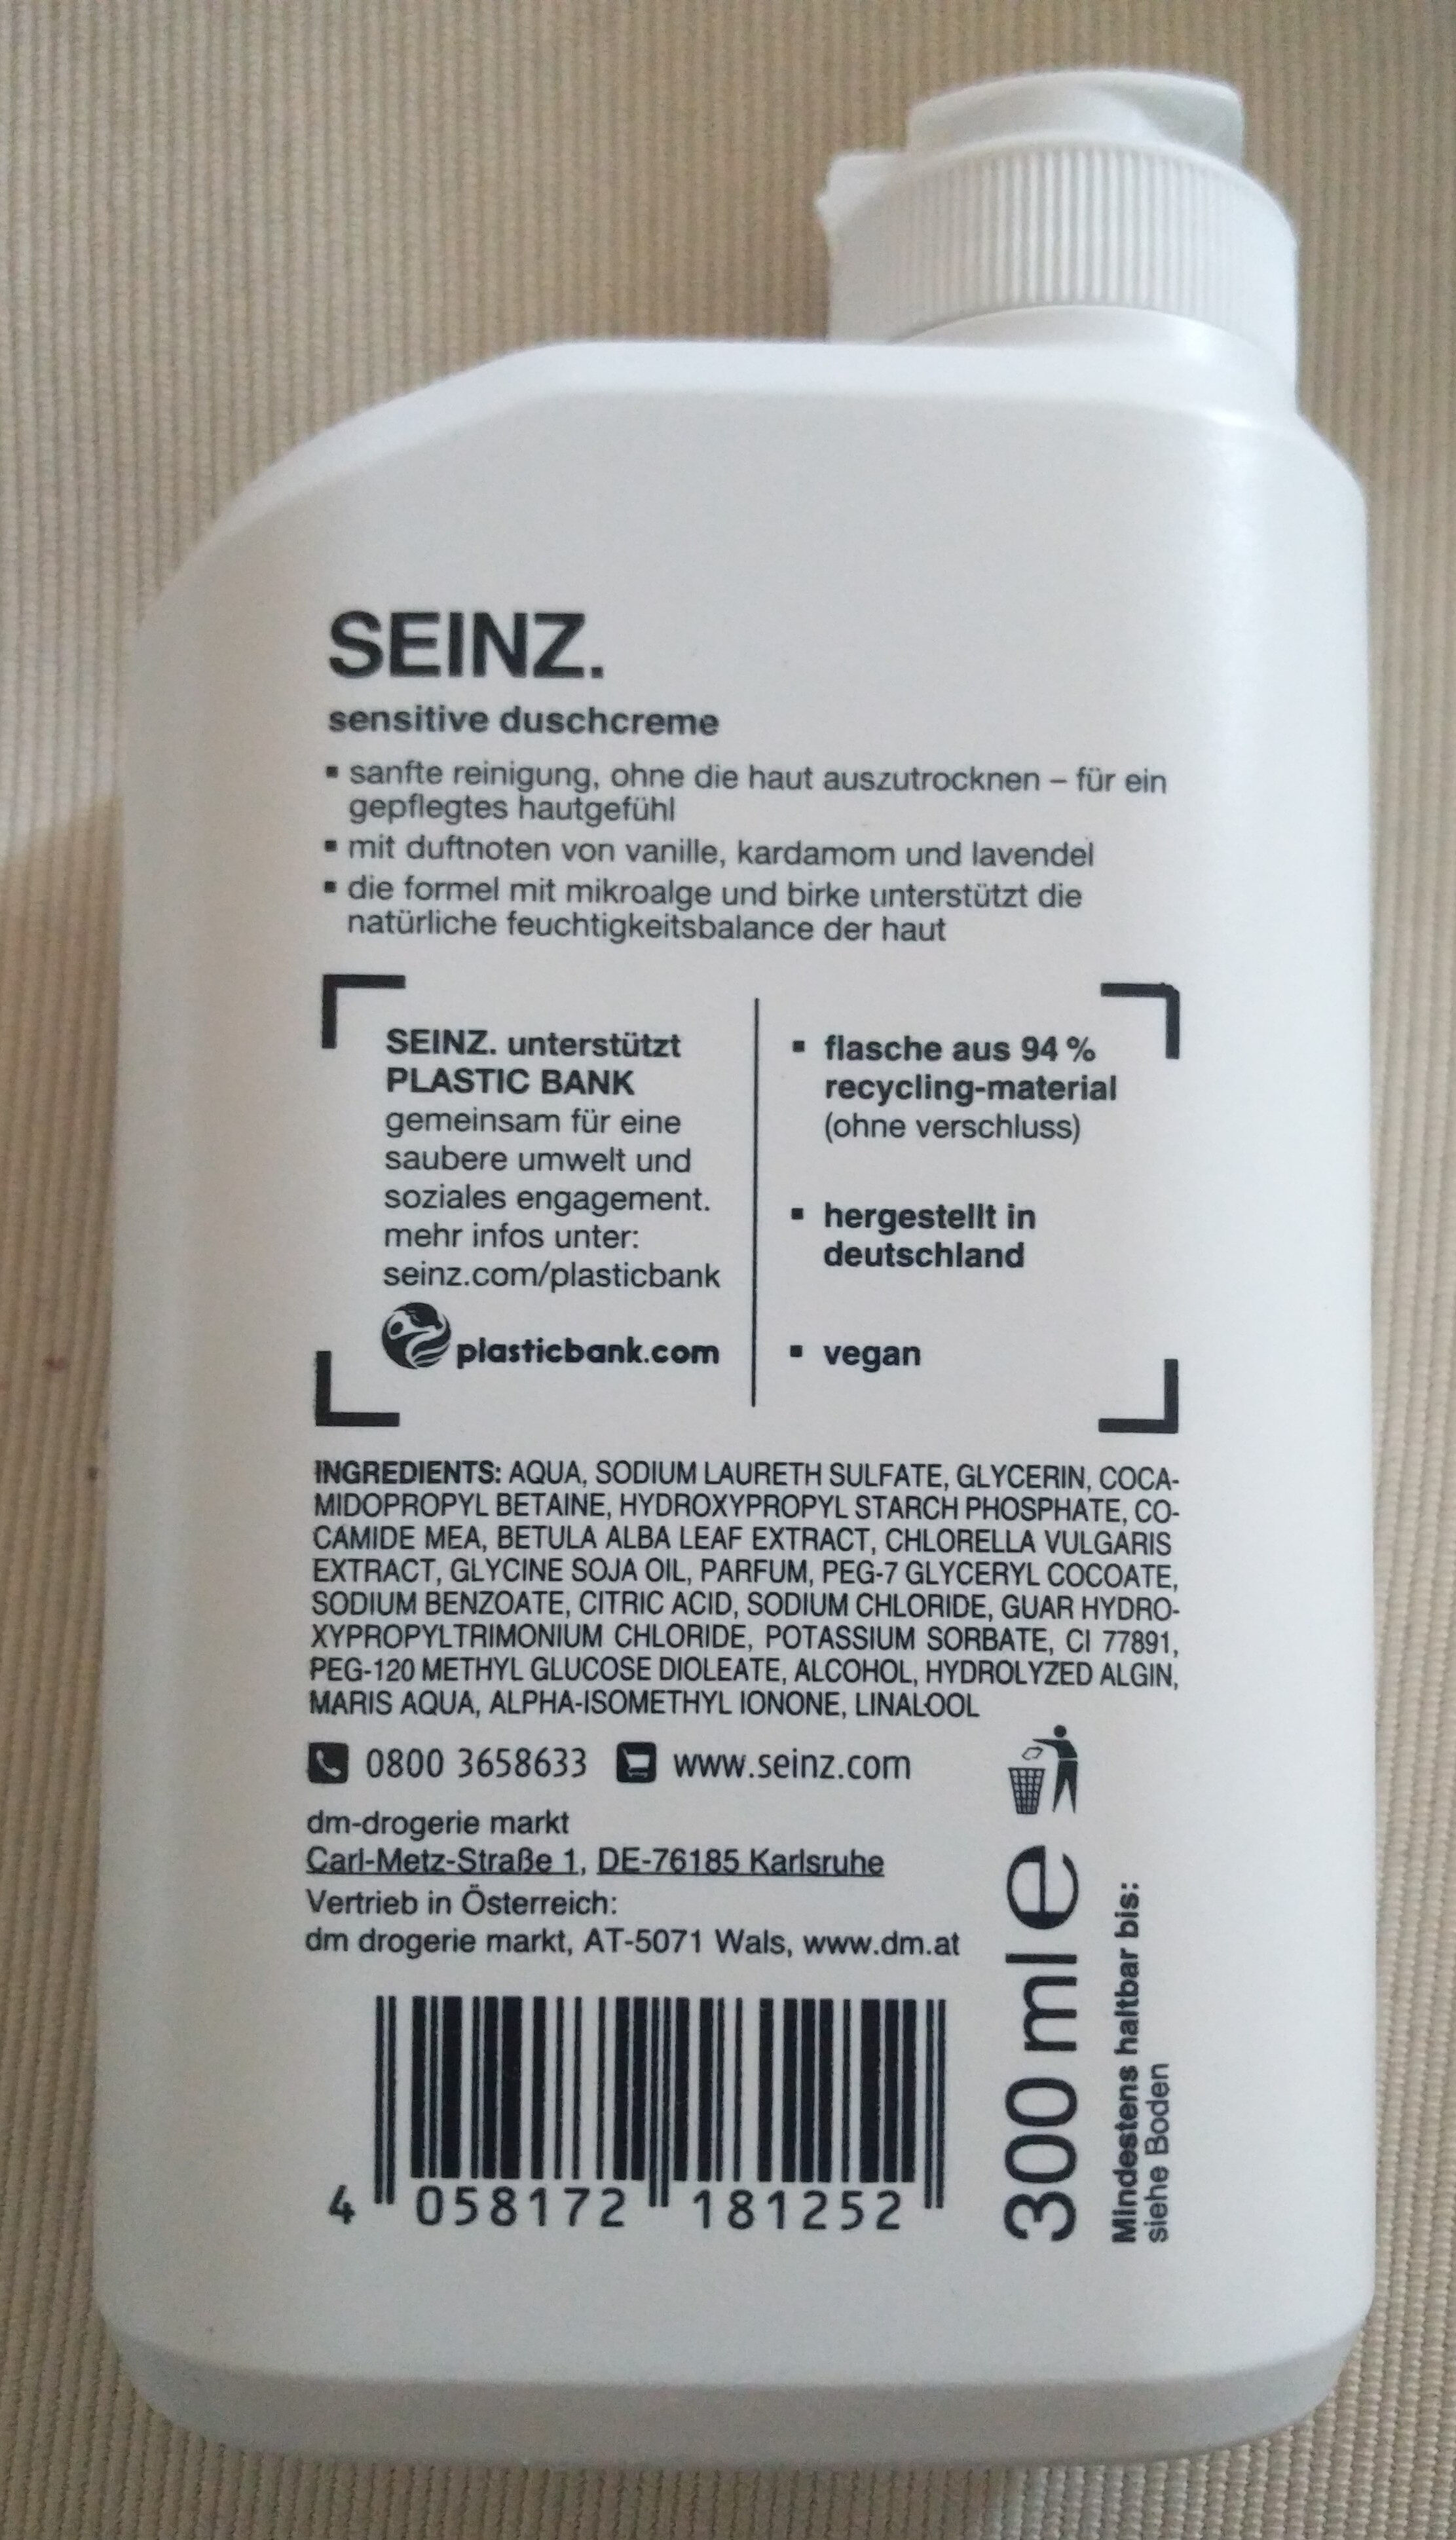 duschcreme sensitiv (mikroalge birke) - Product - en